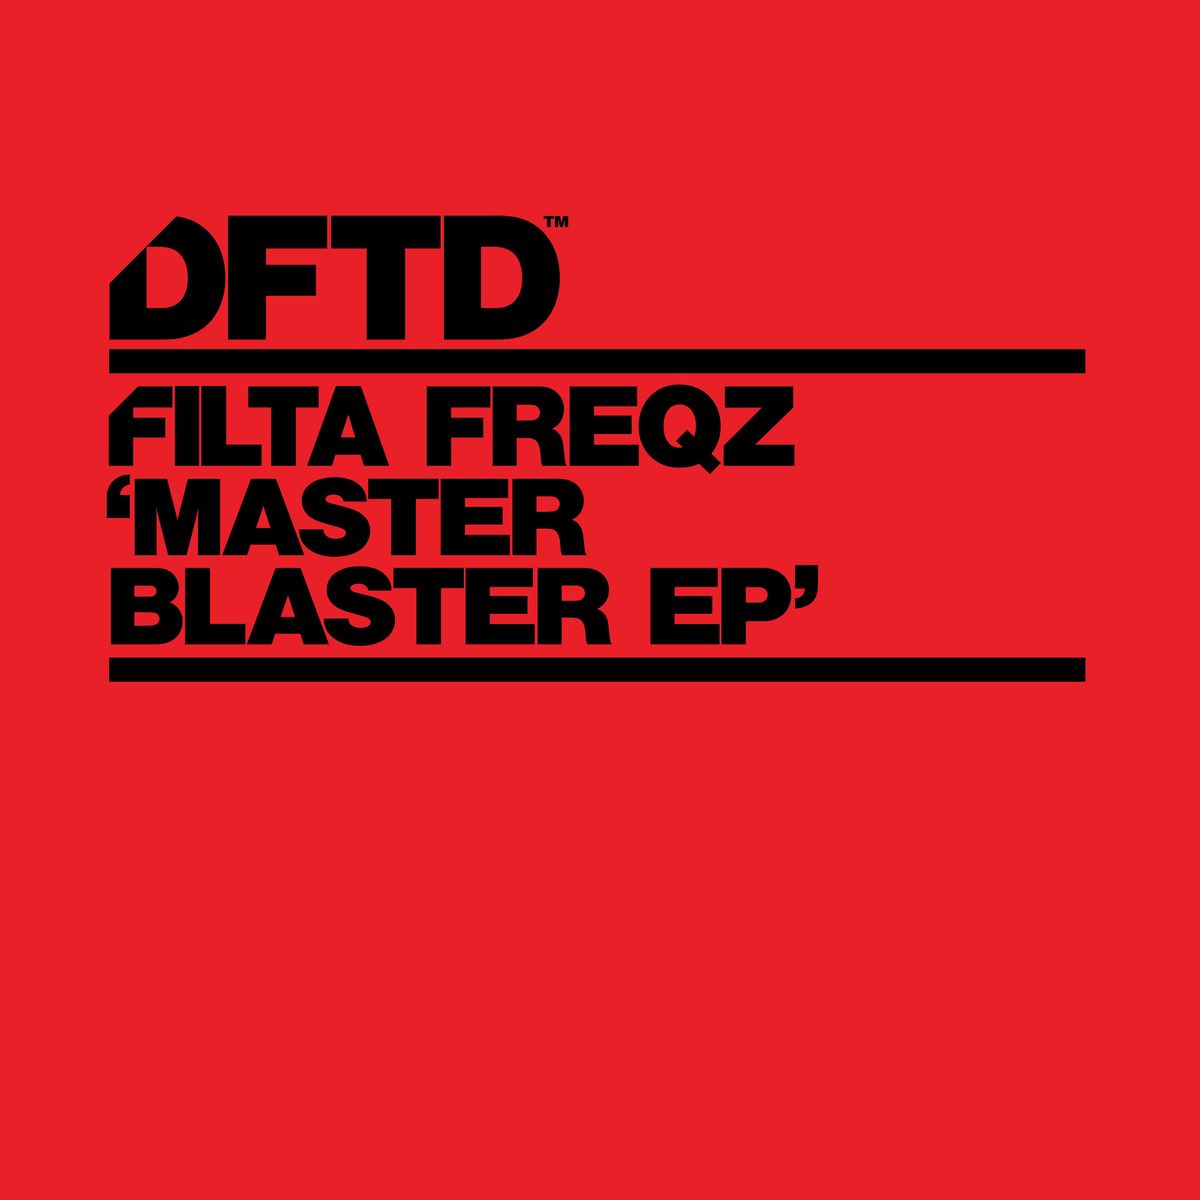 Filta Freqz - Master Blaster EP / DFTD